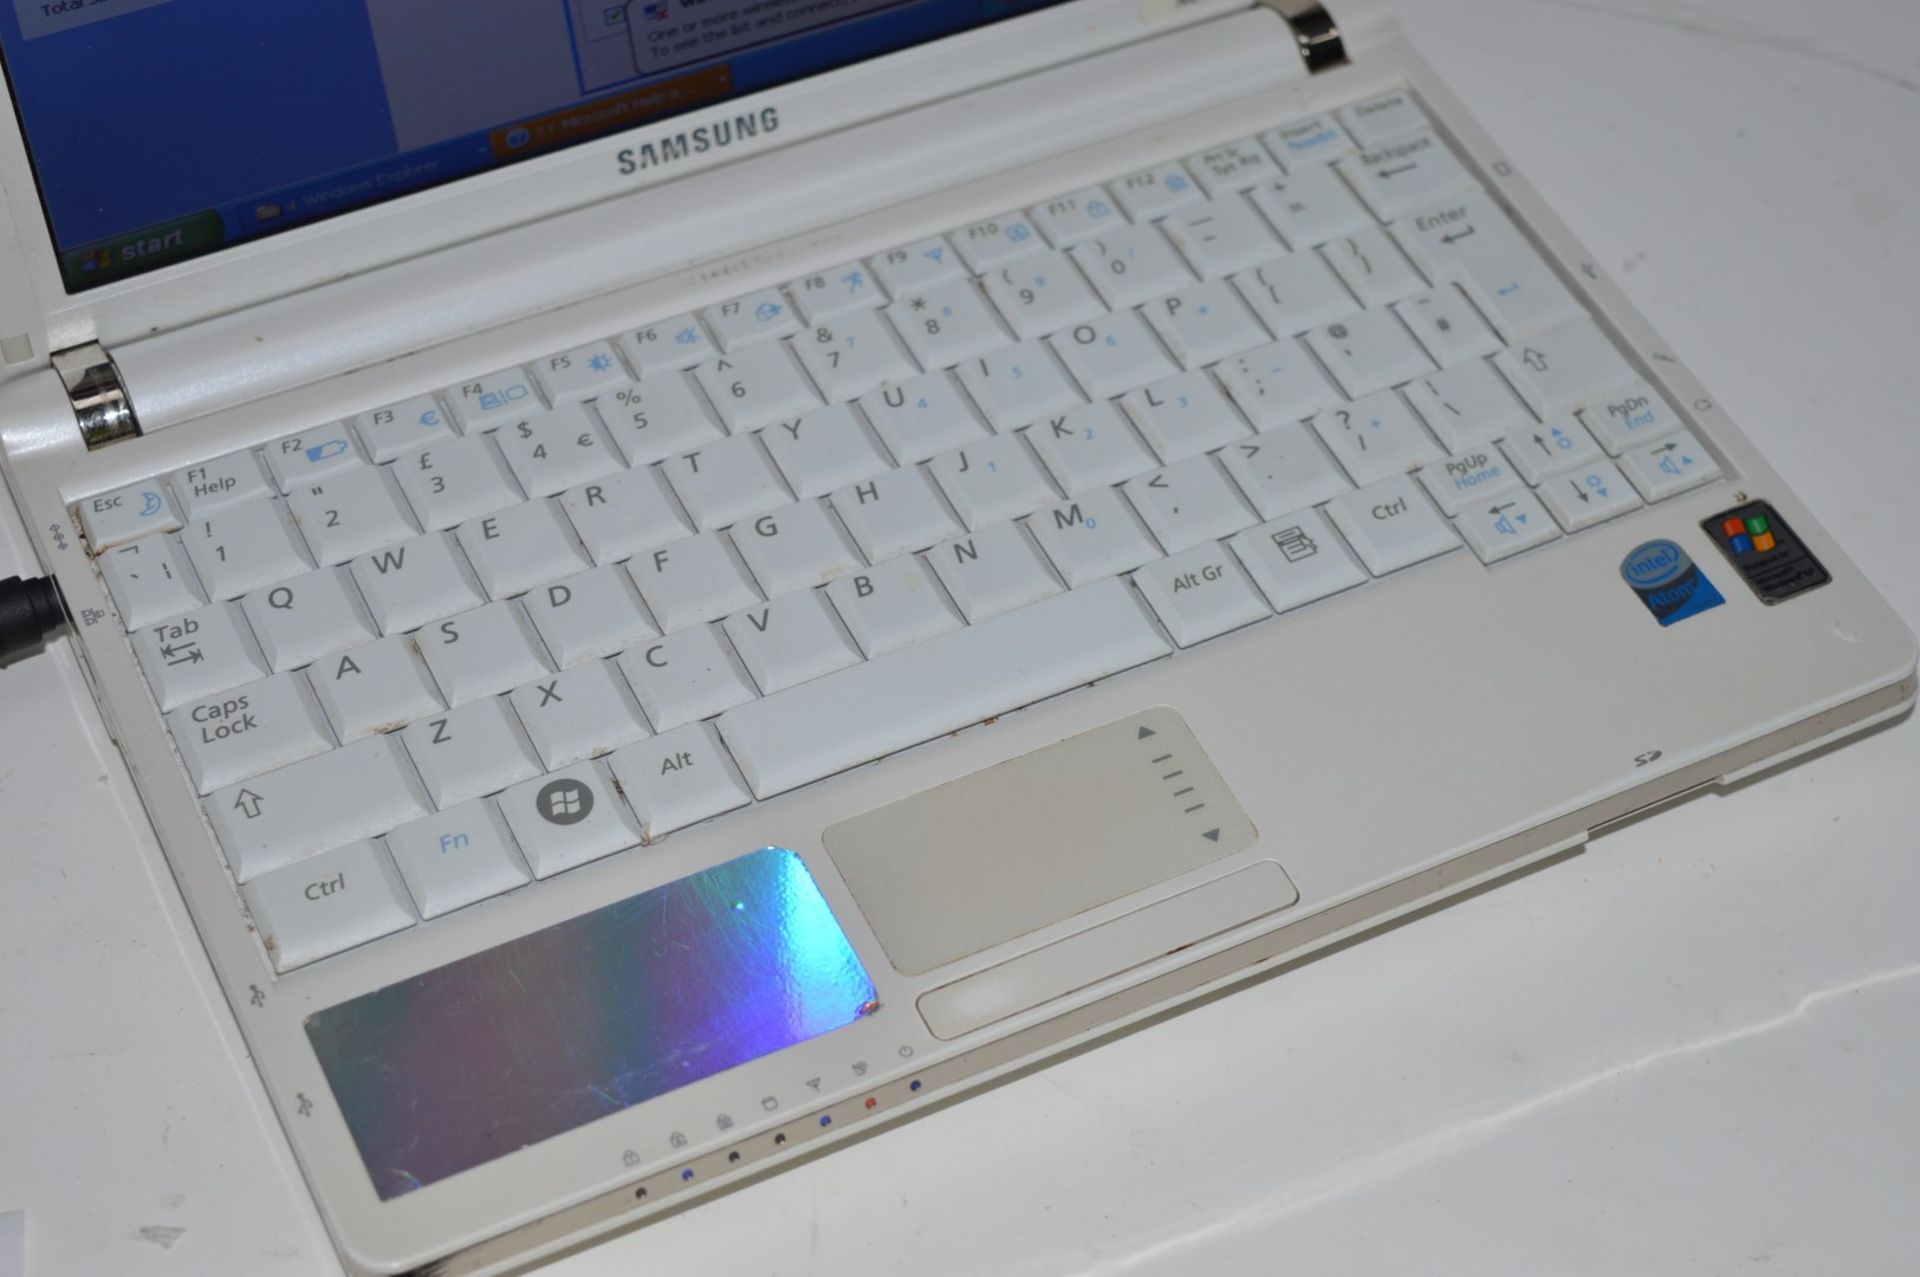 1 x Samsung NP-NC10 Netbook Computer - 10.2 Inch Screen, 1gb Ram, 1.6ghz Atom Processor, 80gfb - Image 4 of 5